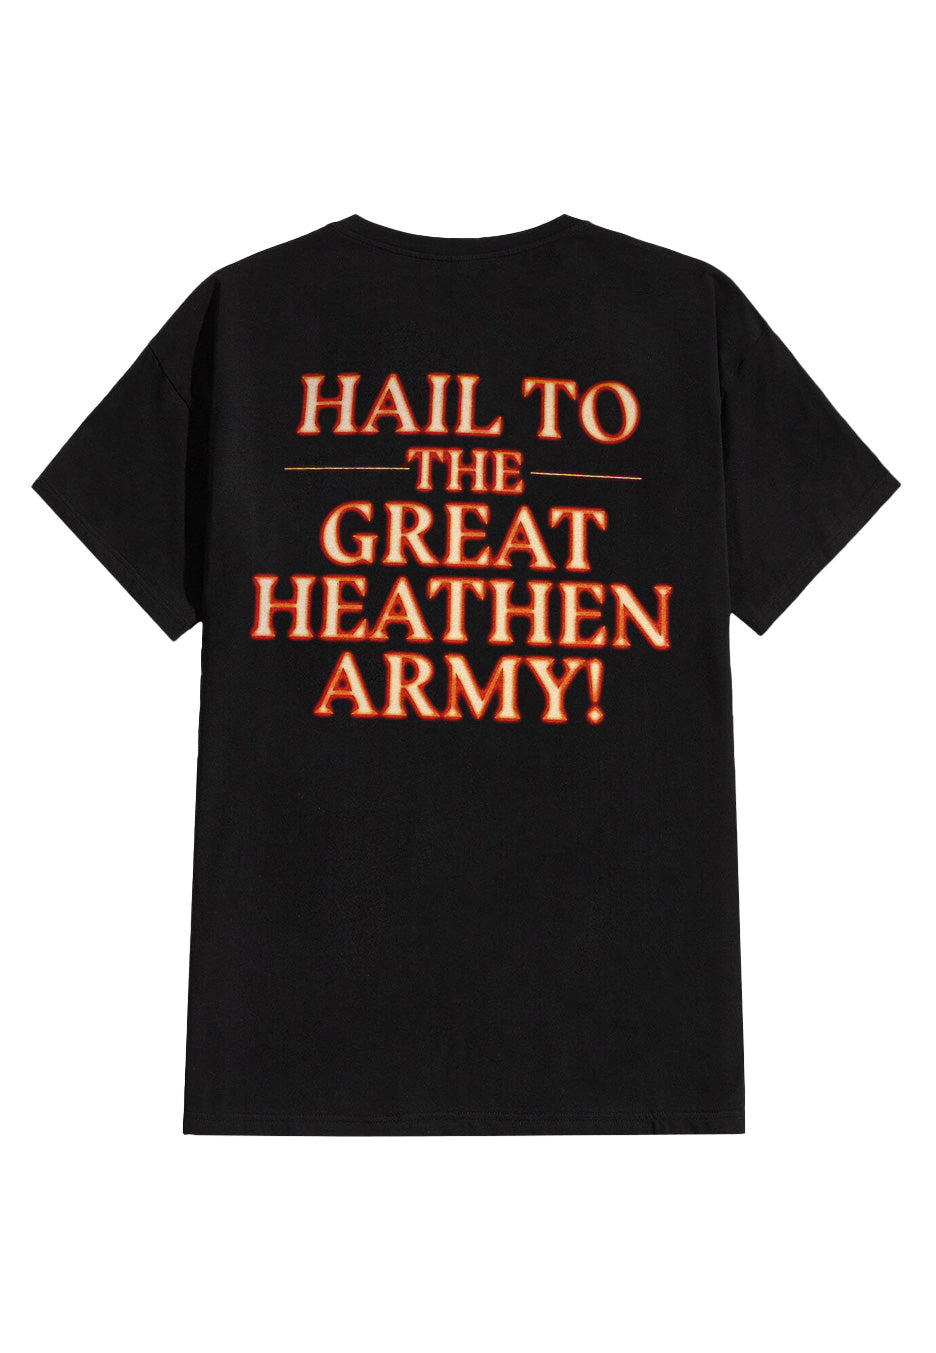 Amon Amarth - The Great Heaten Army (Full Army) - T-Shirt